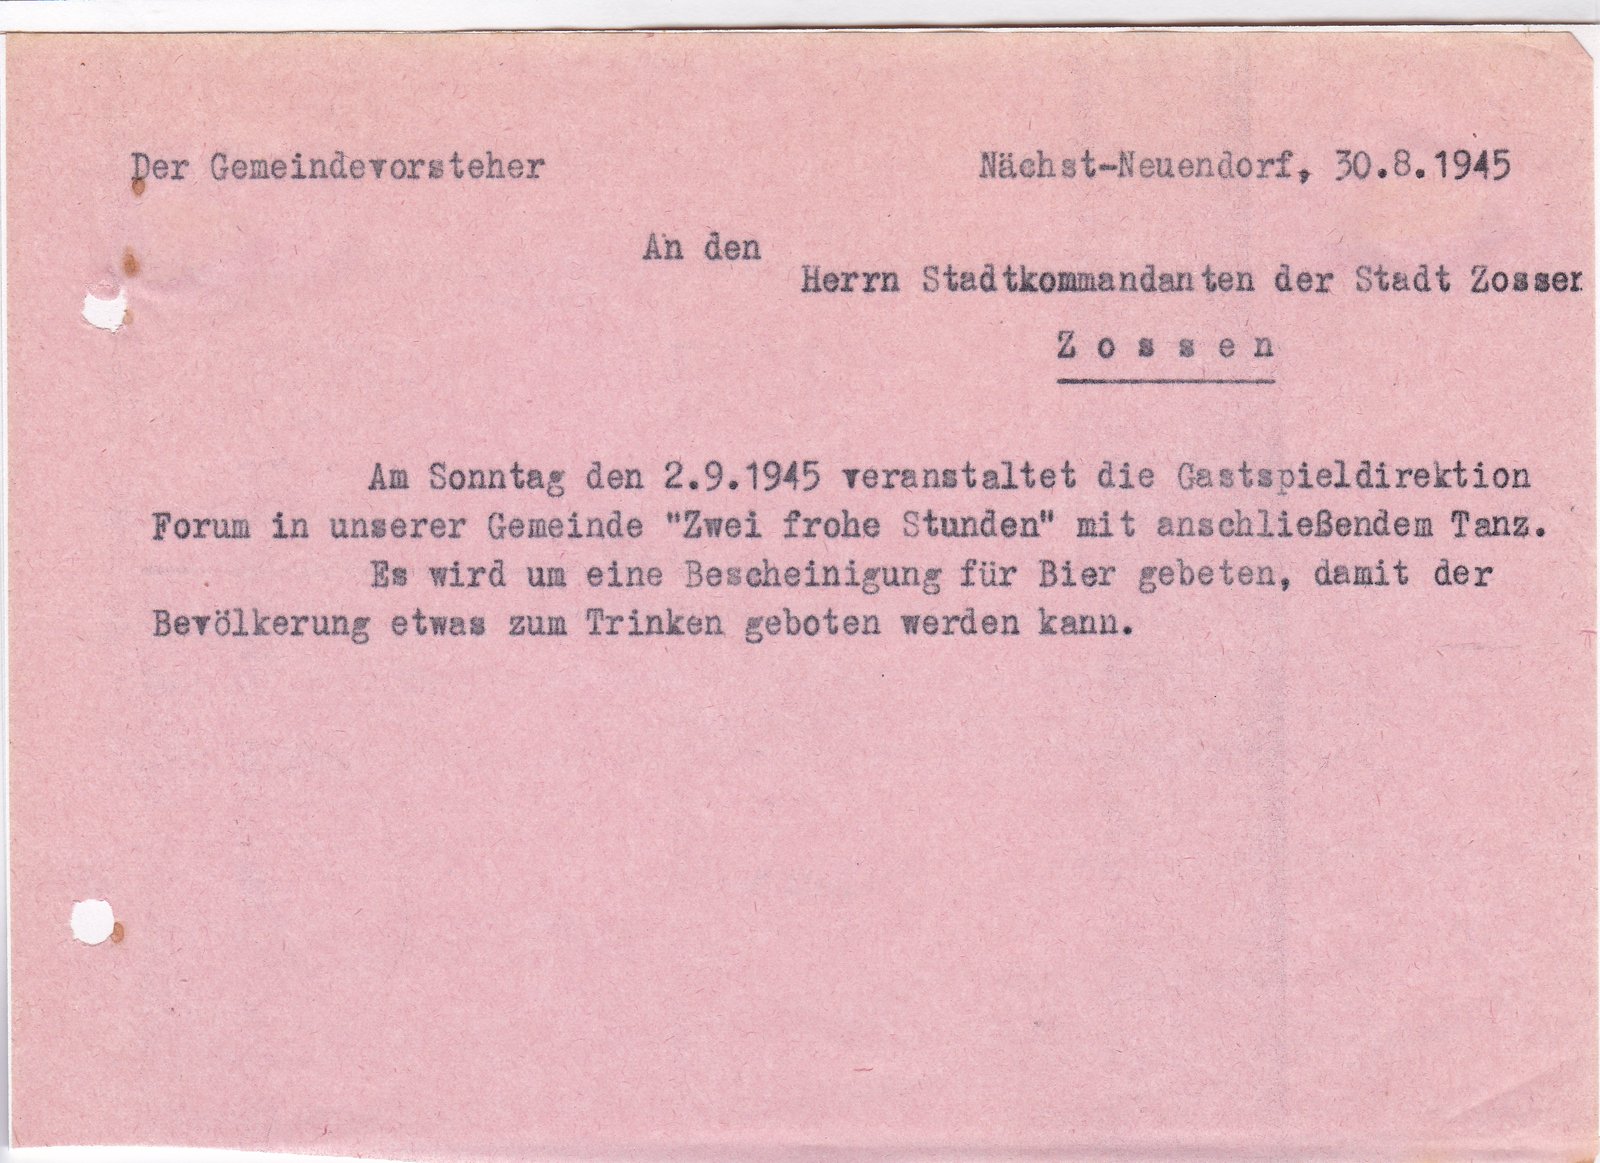 Gmv and Stadtkommandant, 30.08.1945 (03) (Heimatverein "Alter Krug" Zossen e.V. CC BY-NC-SA)